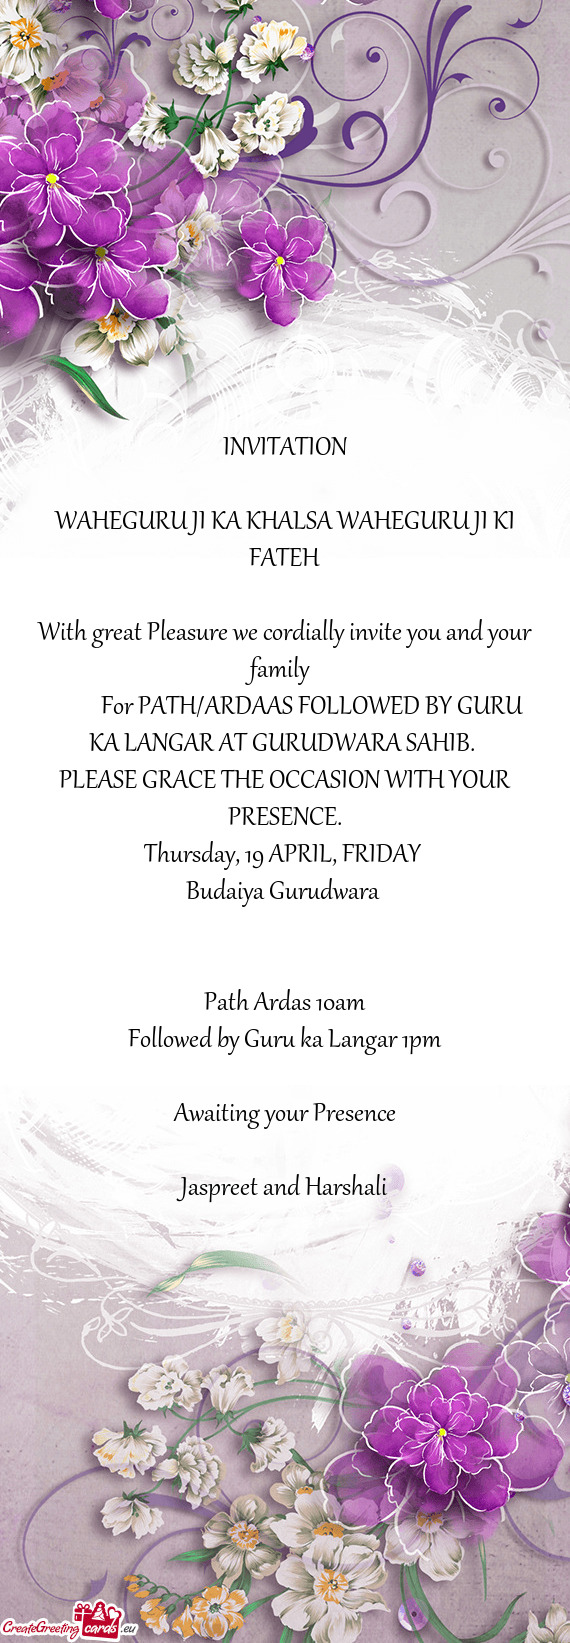 For PATH/ARDAAS FOLLOWED BY GURU KA LANGAR AT GURUDWARA SAHIB